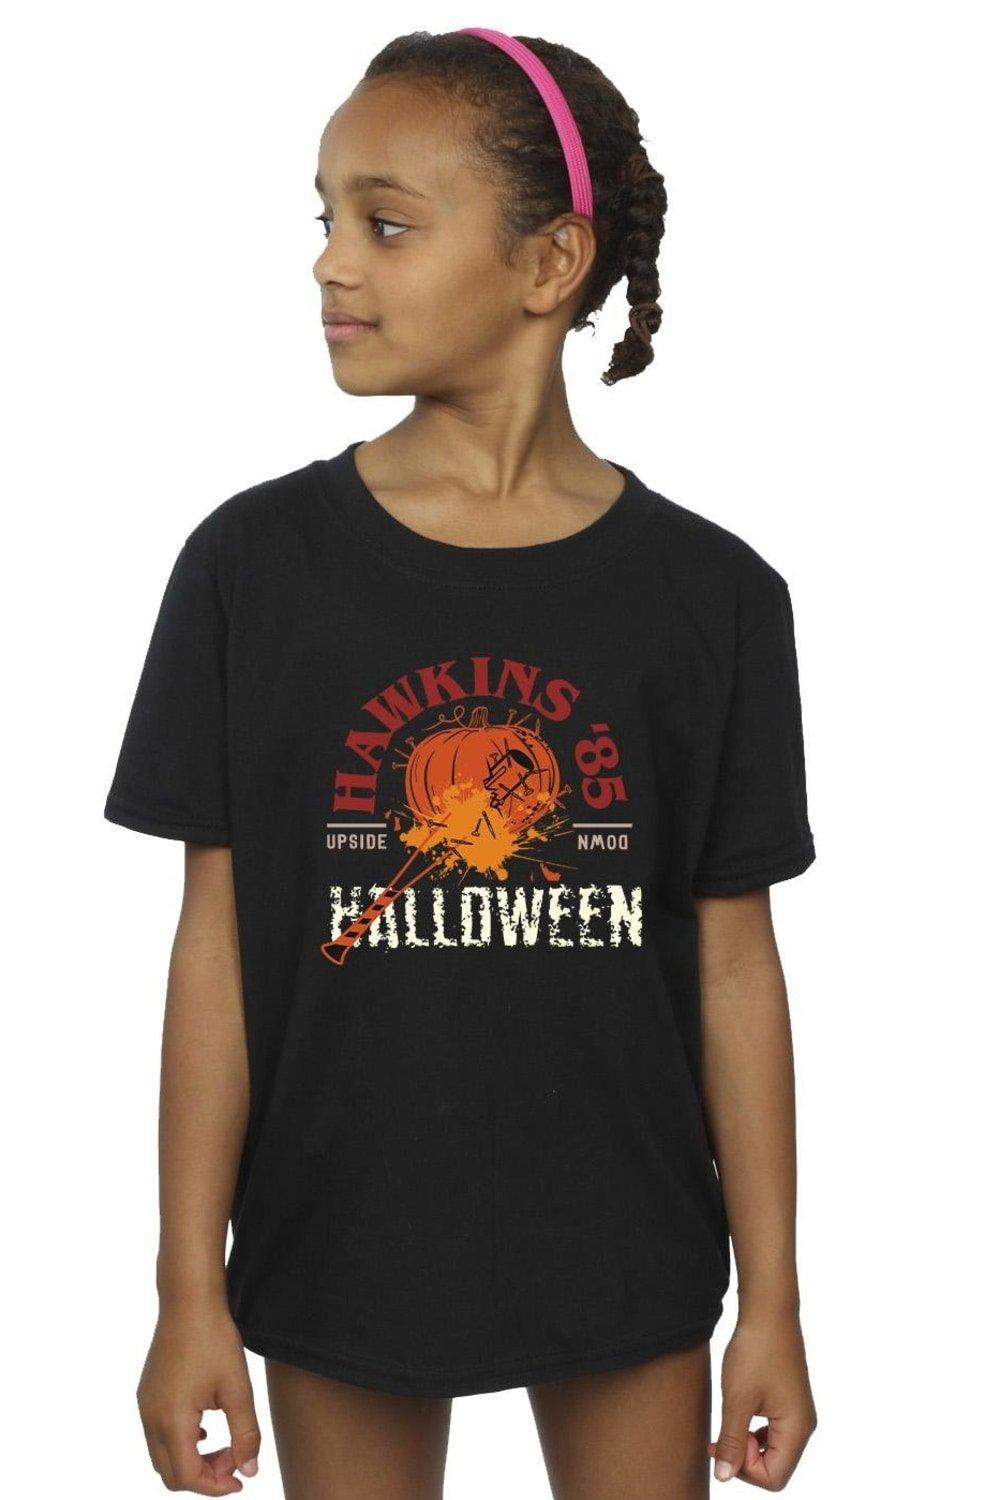 Stranger Things Hawkins Halloween Cotton T-Shirt